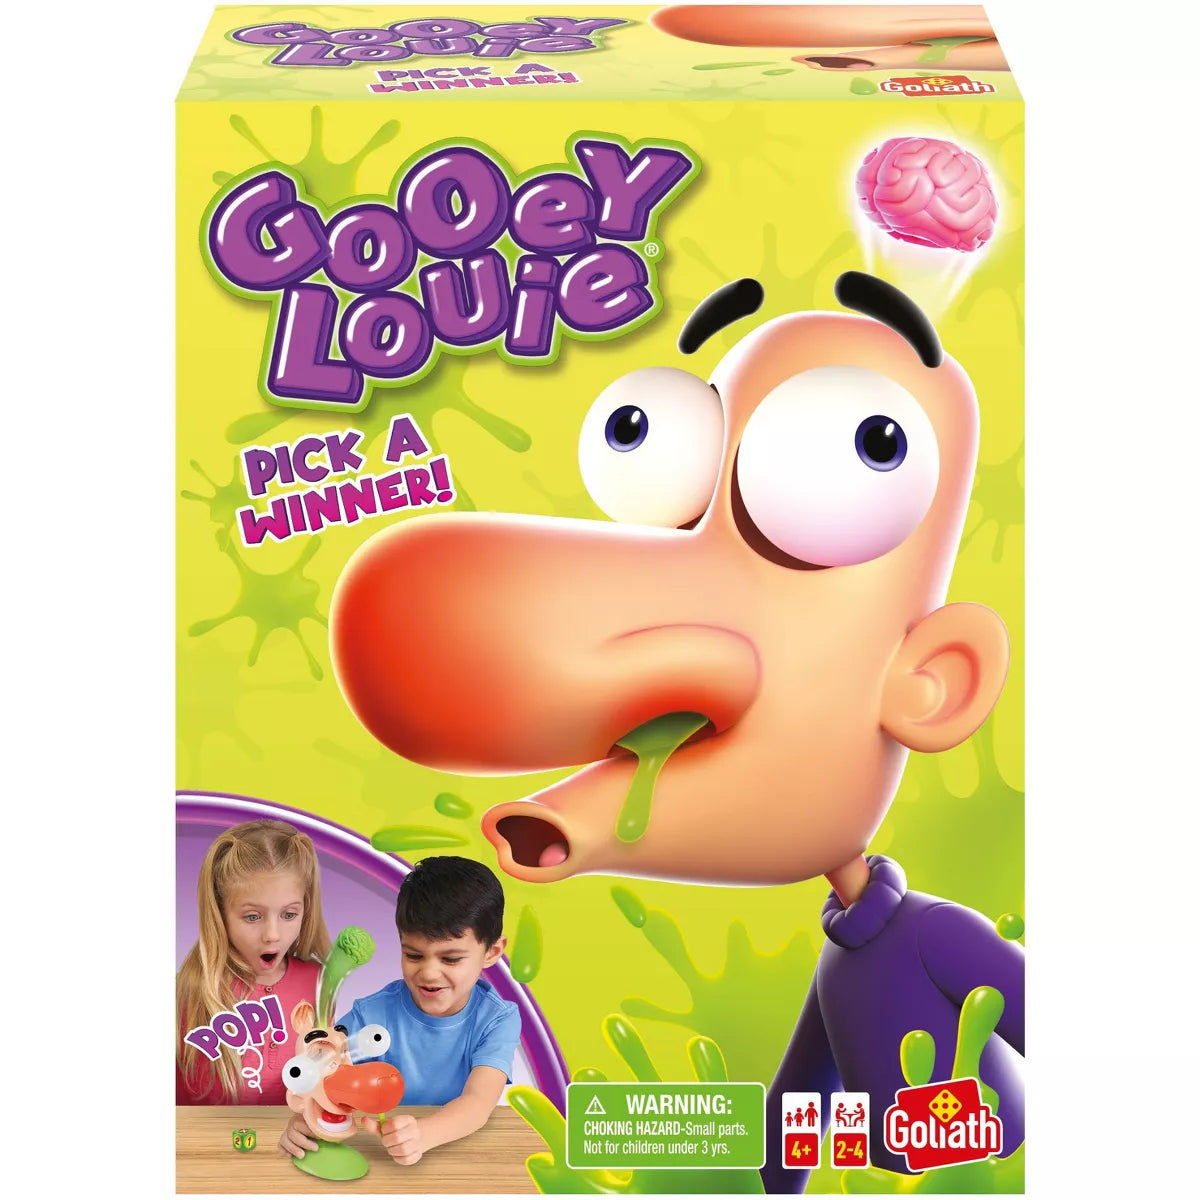 Doggie Doo Corgi Game by Goliath Games - Brand New